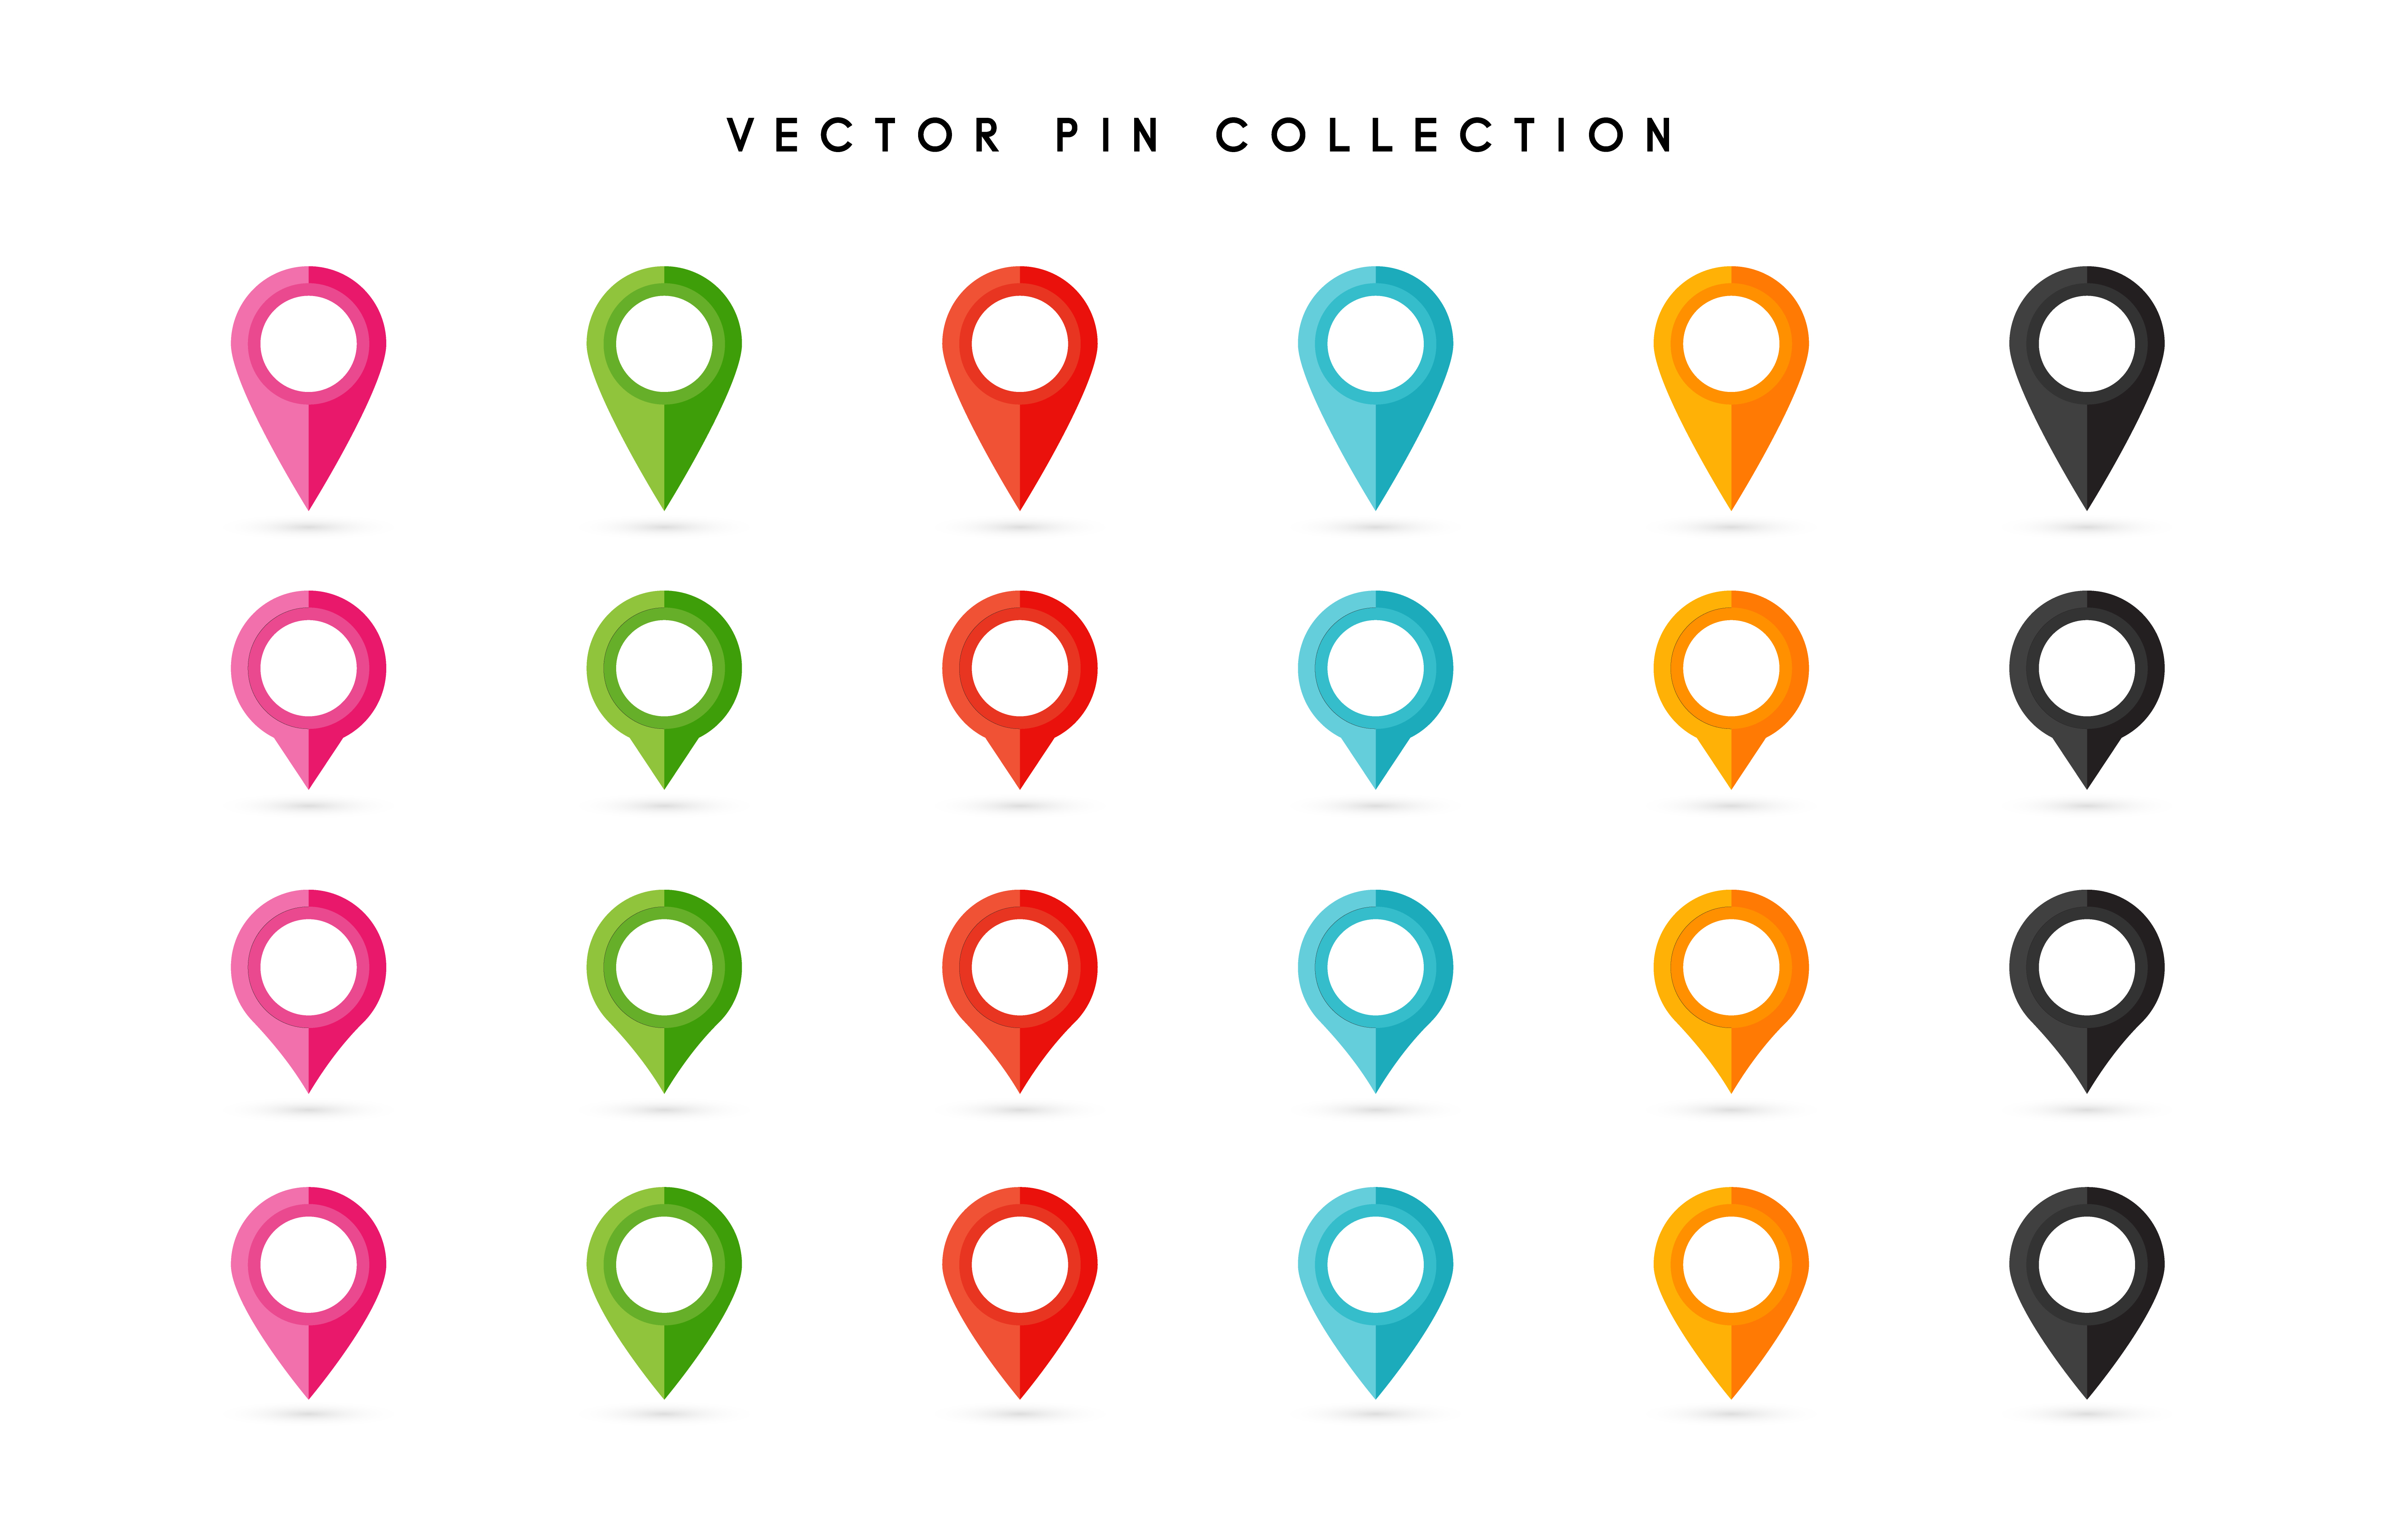 Location Pin Map Pin Flat Icon Vector Design 279463 Vector Art At